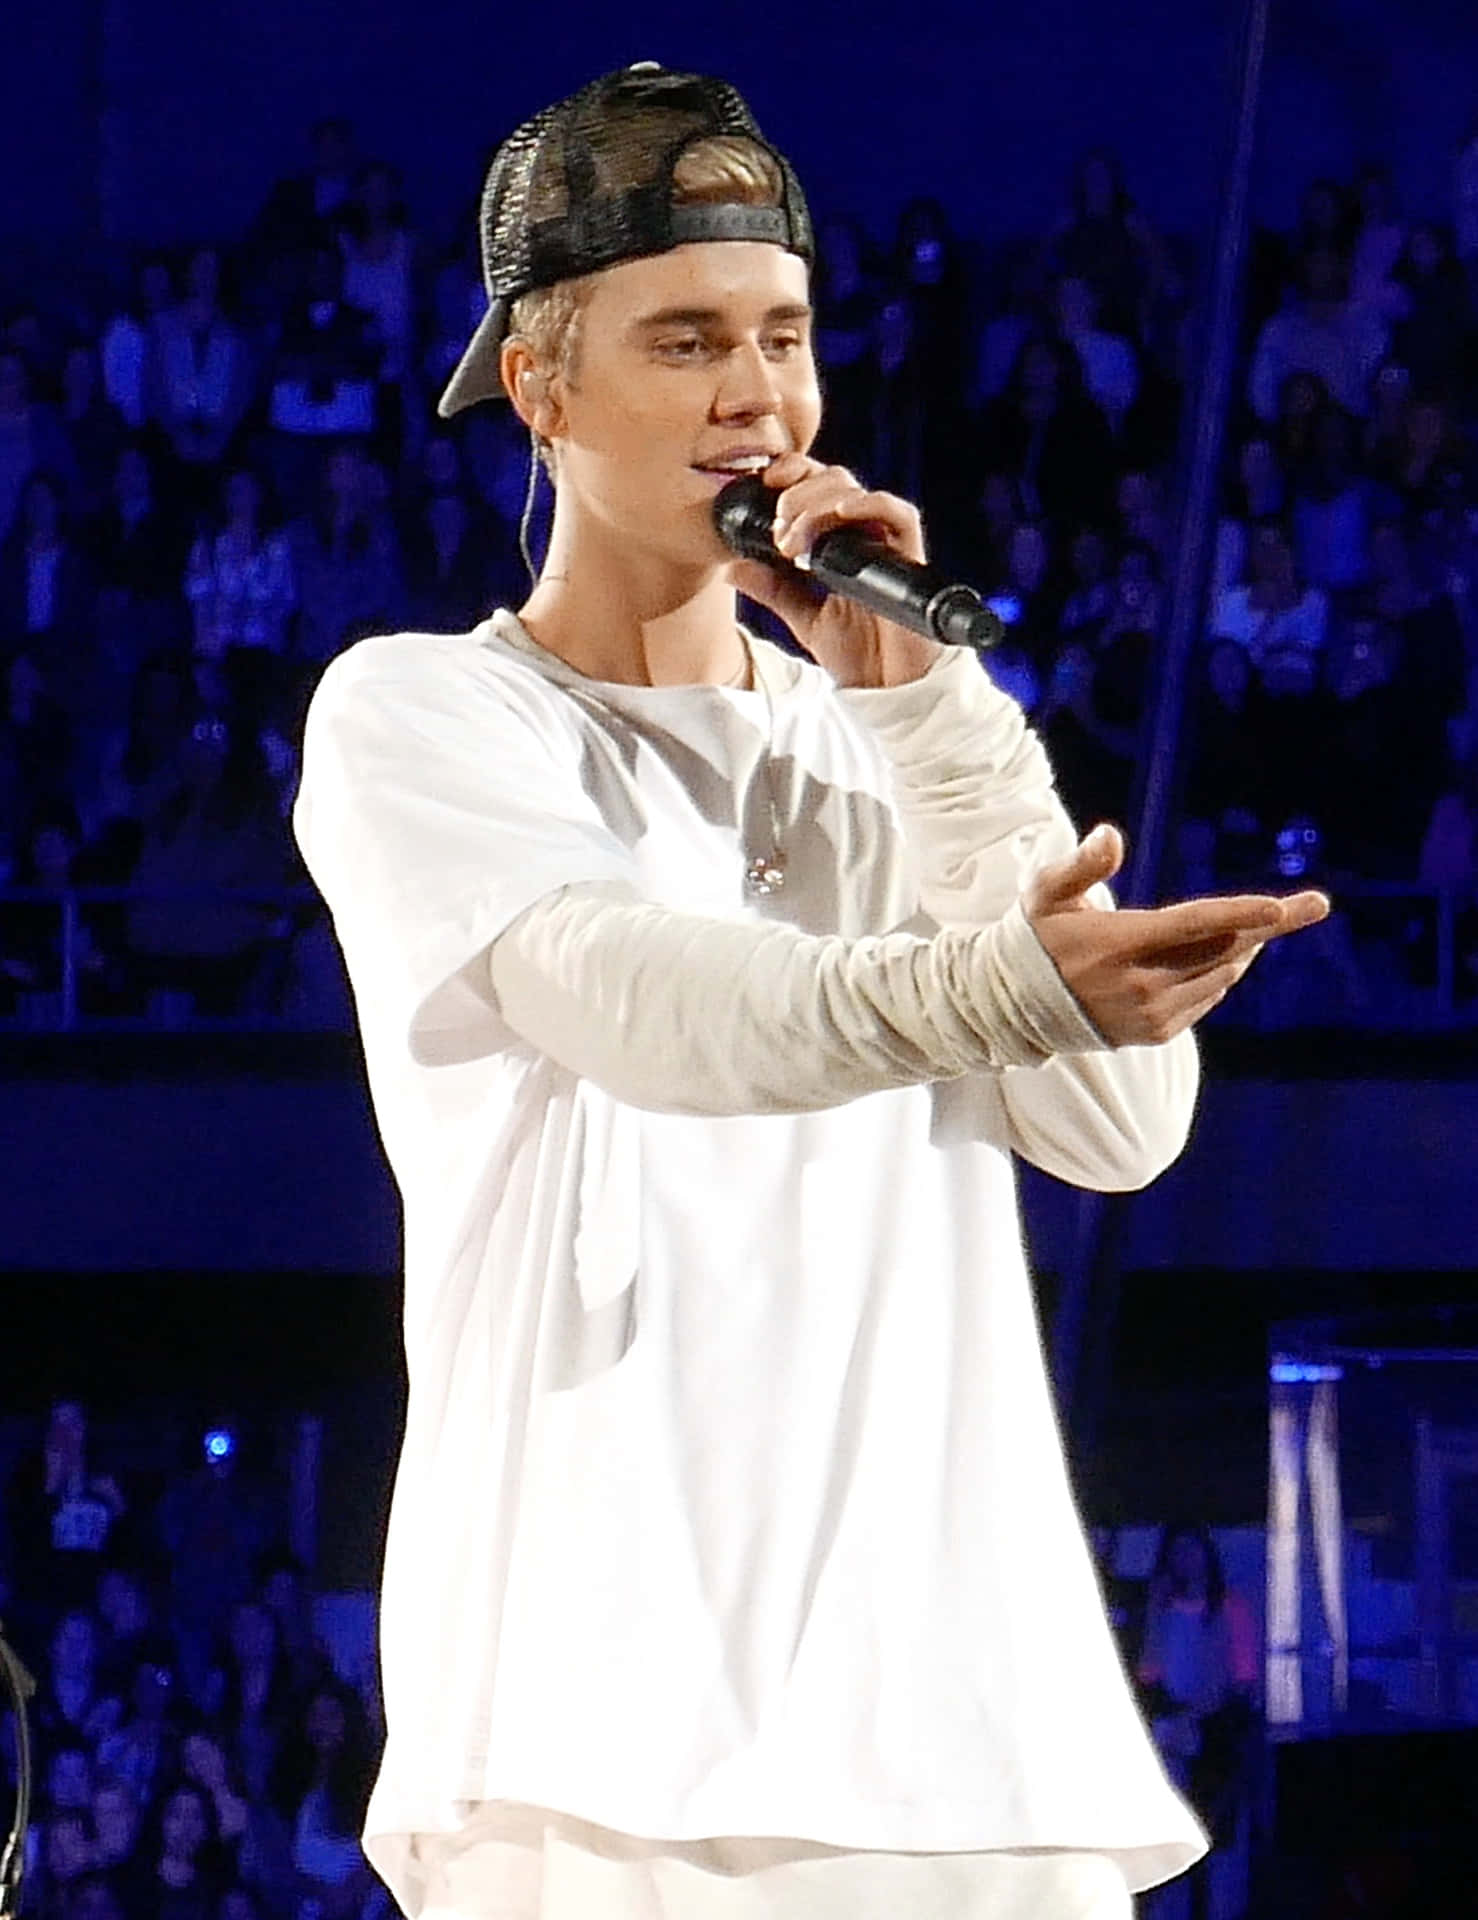 Microphone On Justin Bieber 2015 Background